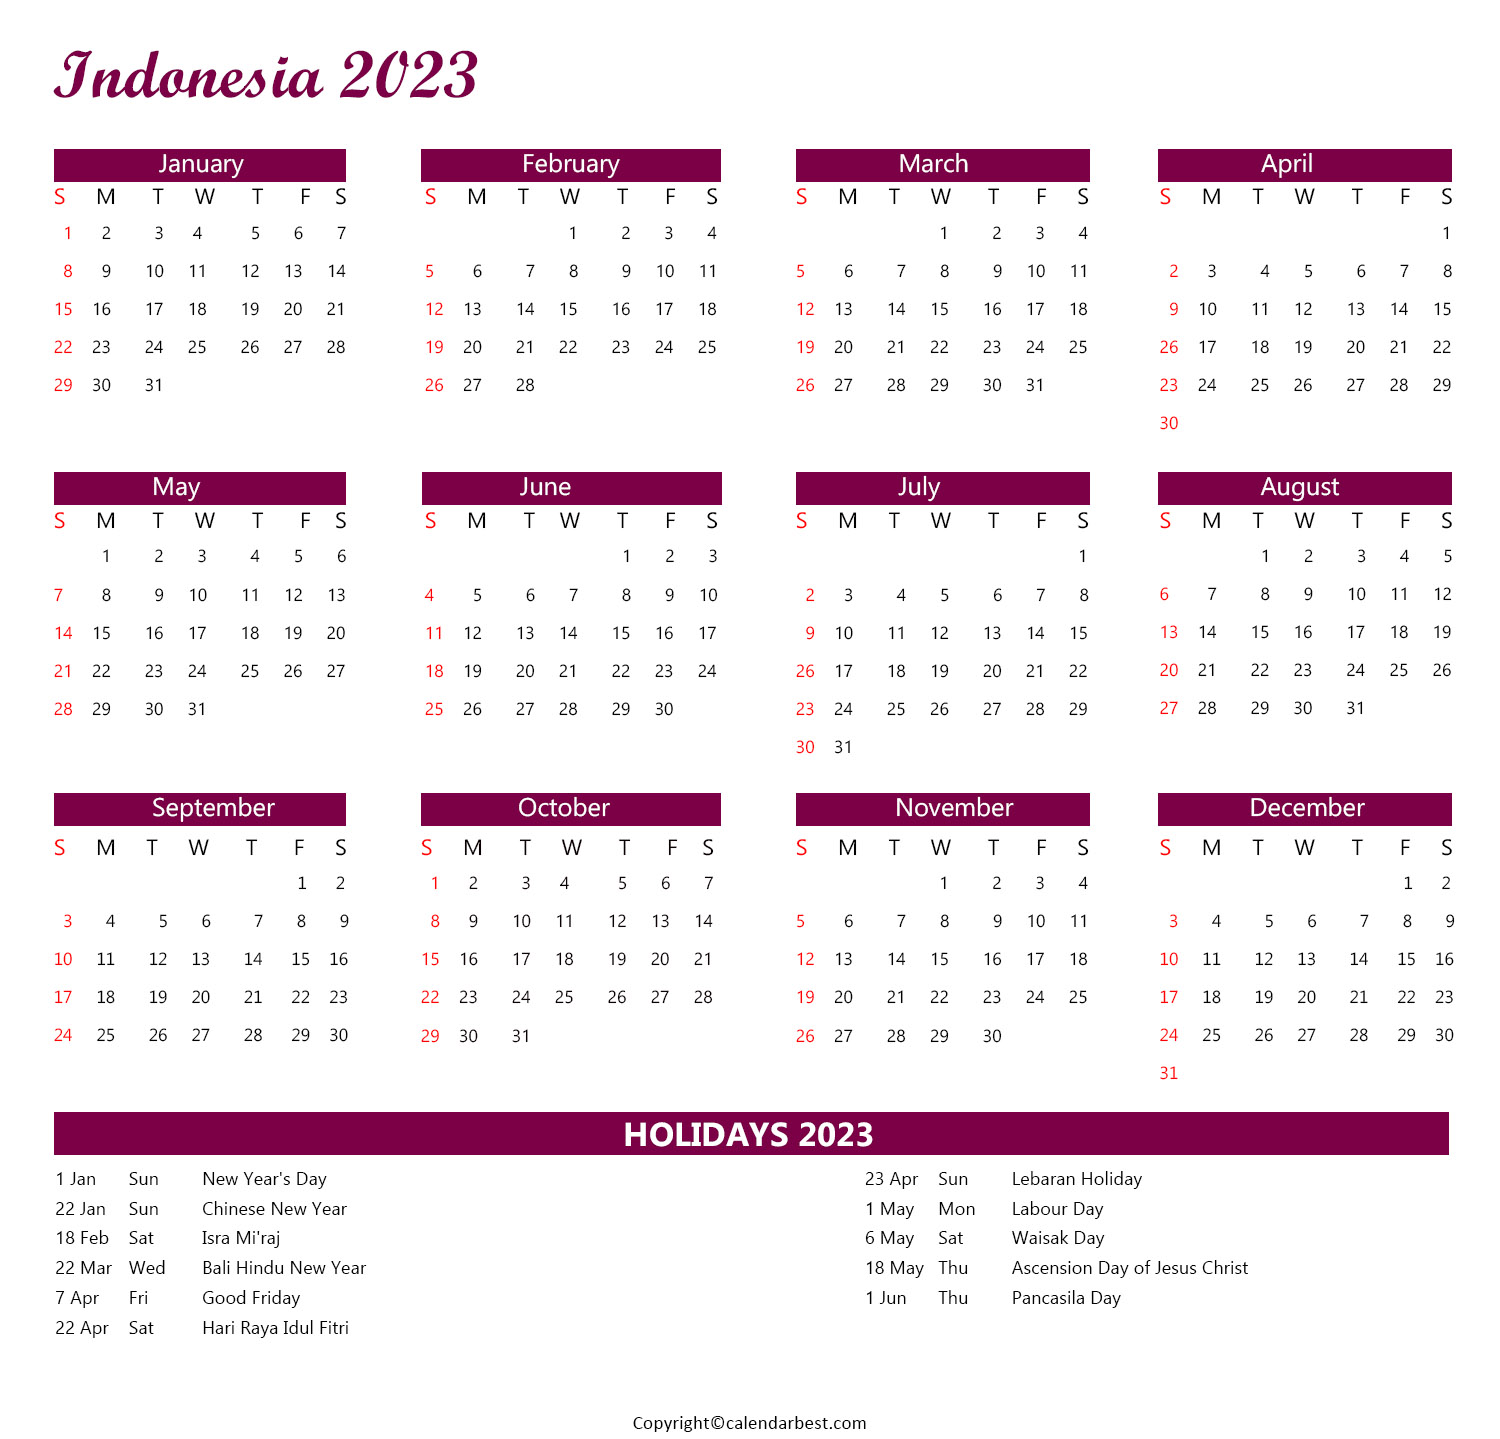 Indonesia Calendar with Holidays 2023